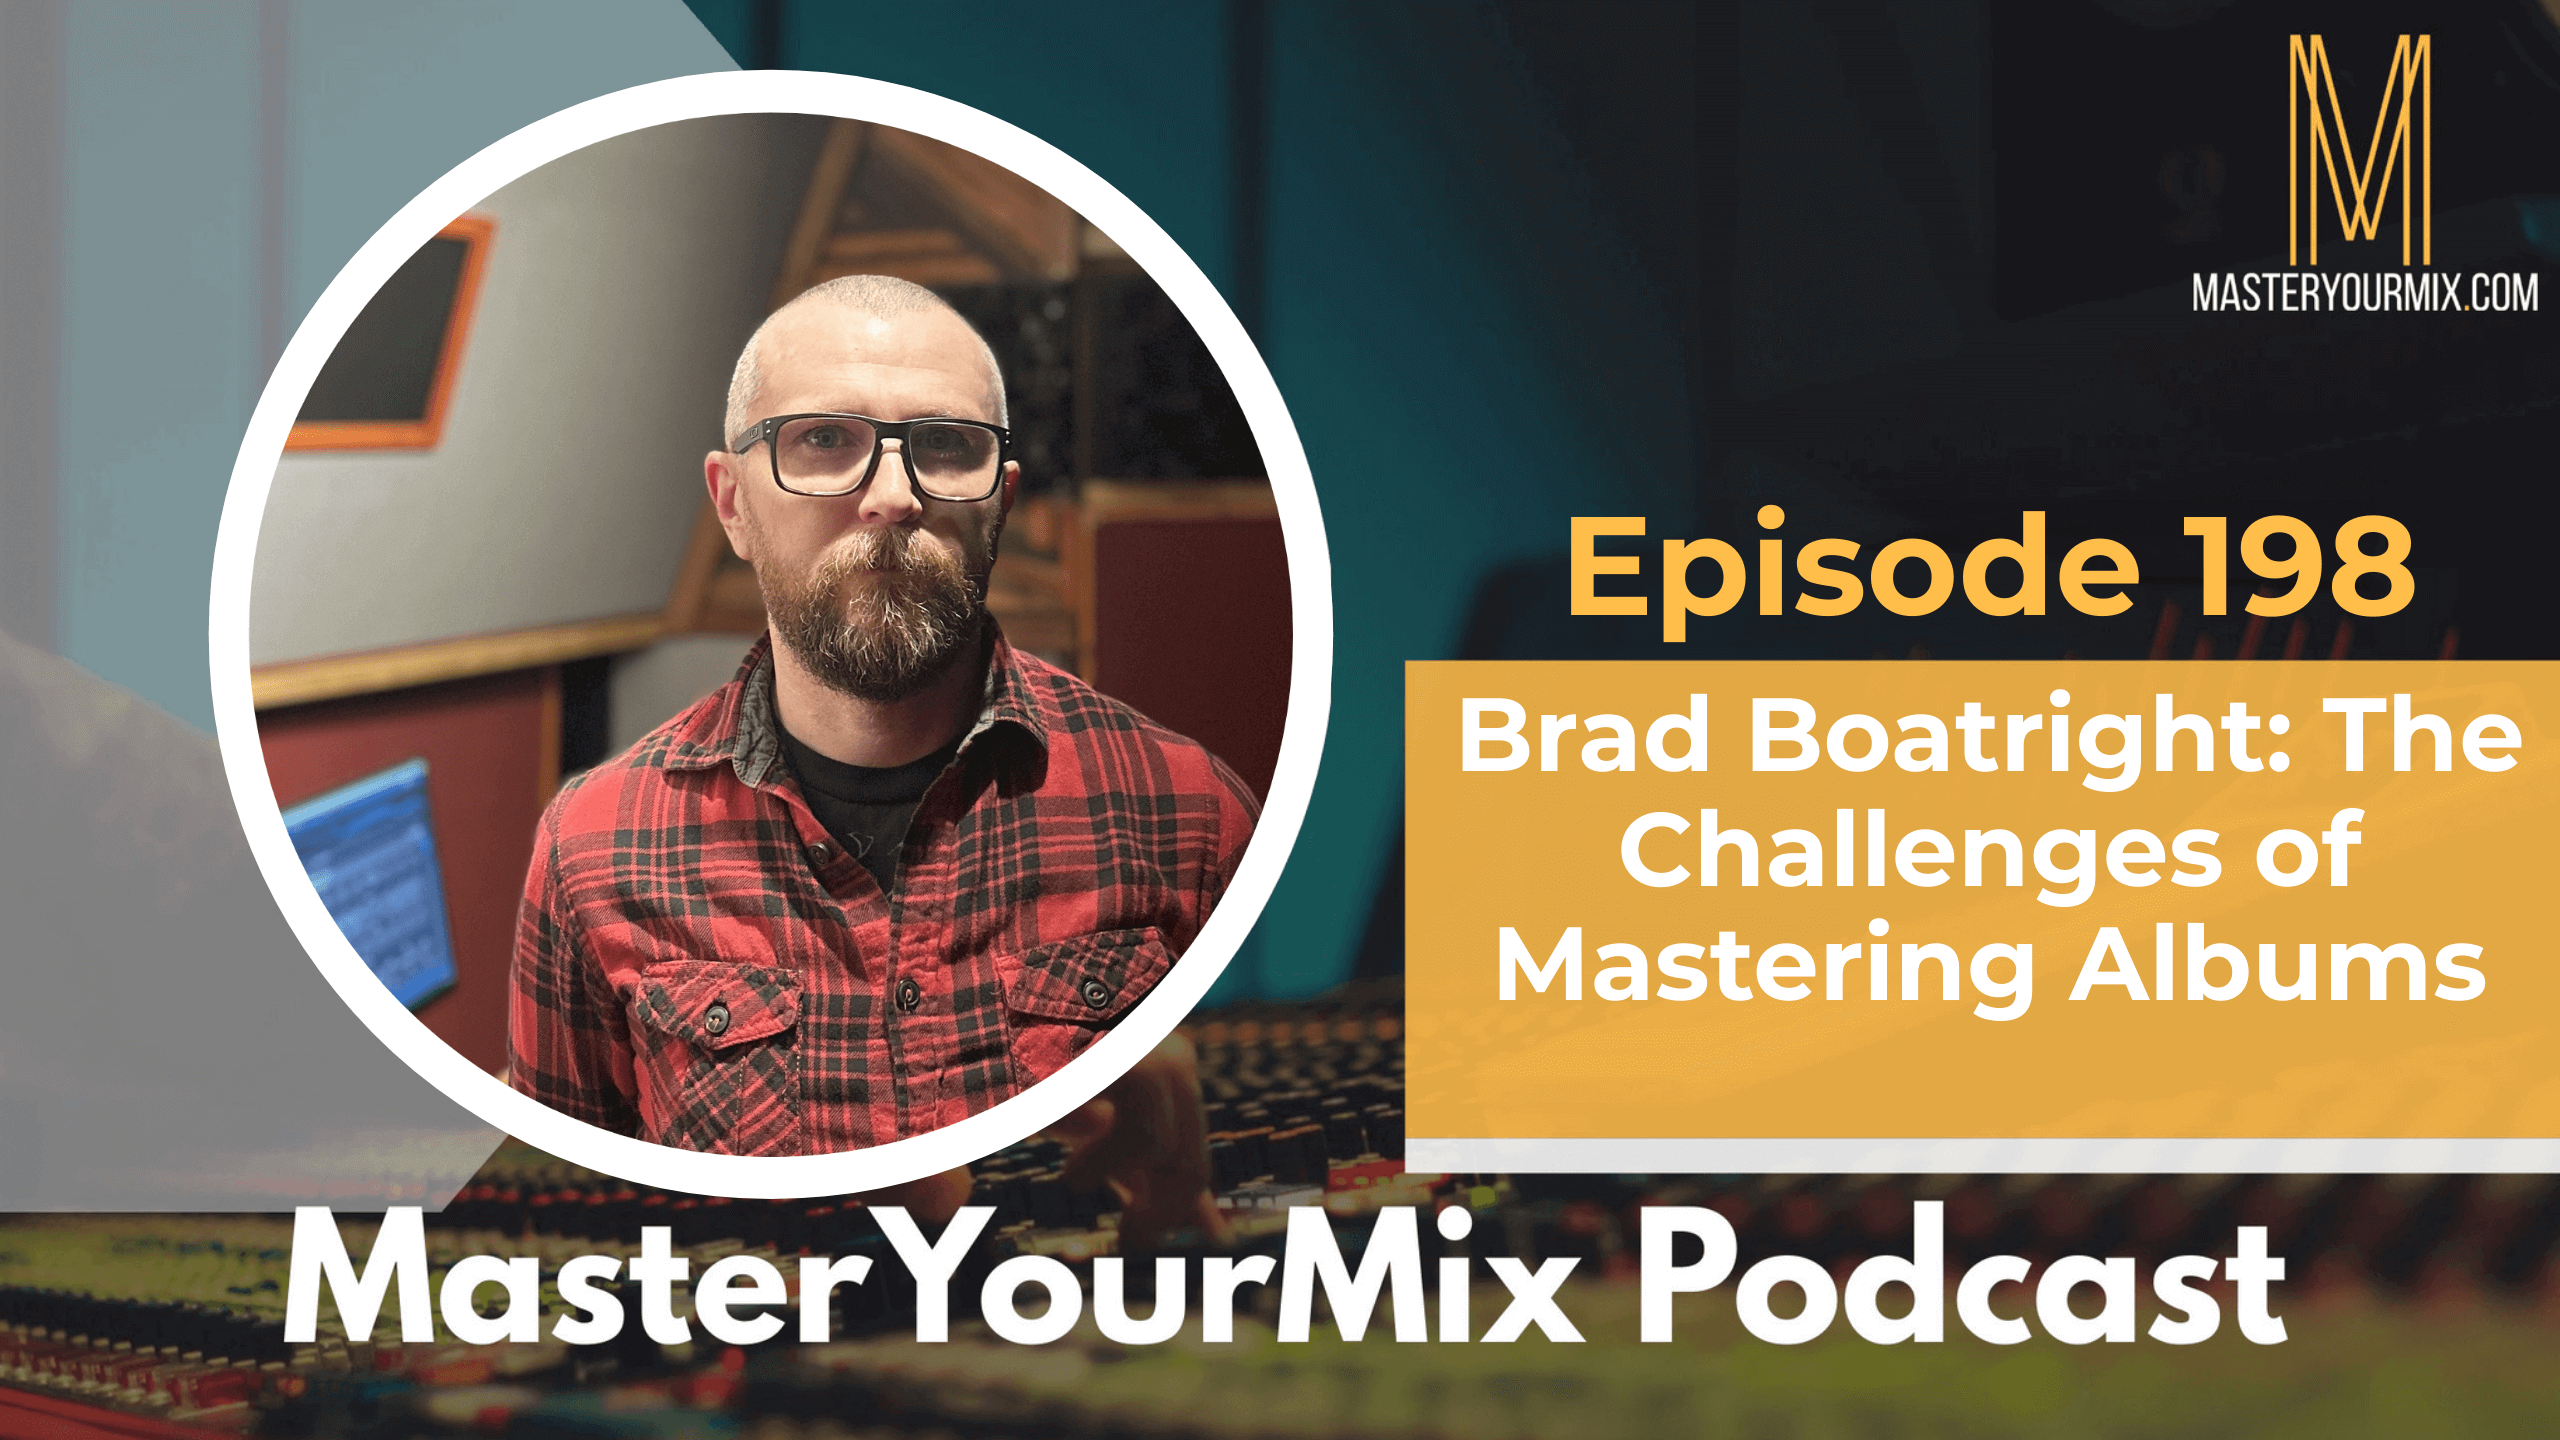 master your mix podcast, ep 198 brad boatright